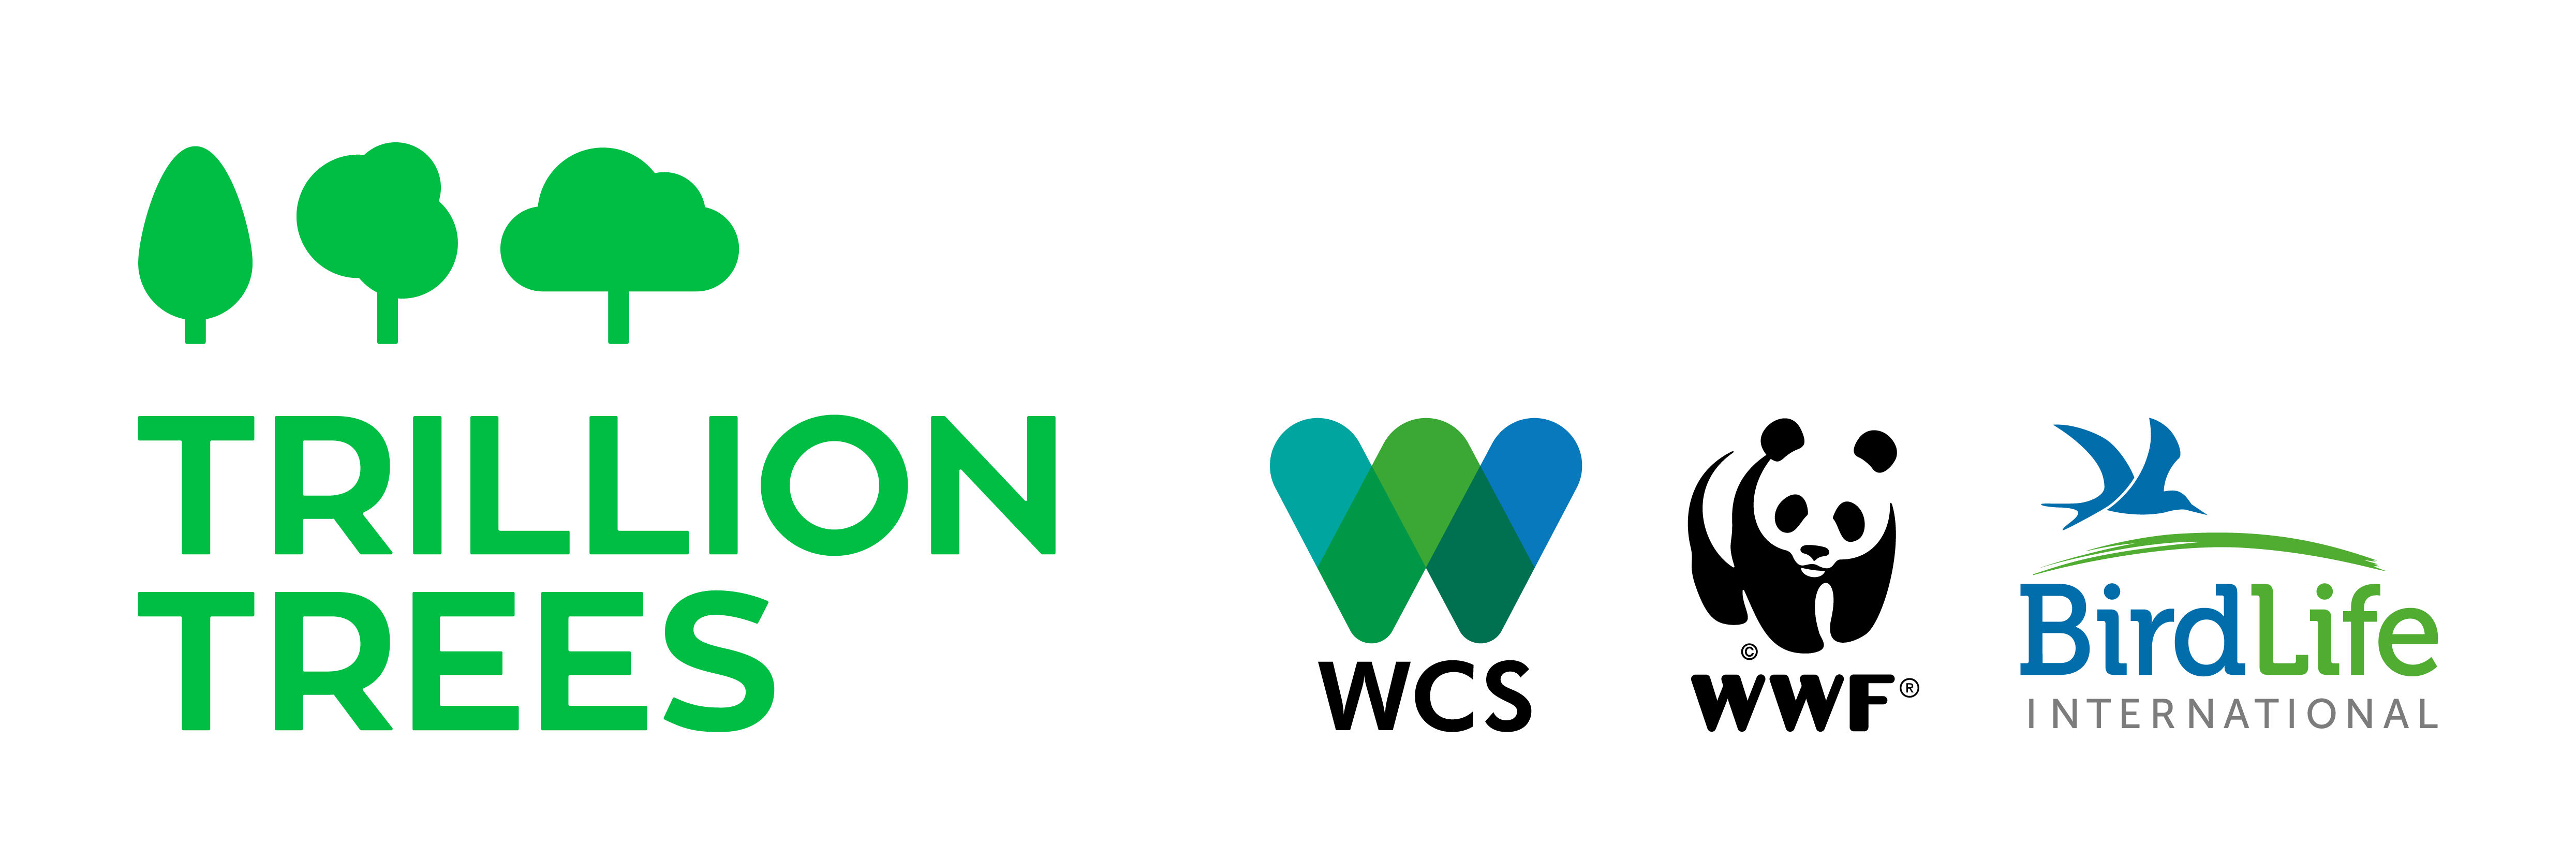 Trillion Trees, Wildlife Conservation Society, WWF and BirdLife logos